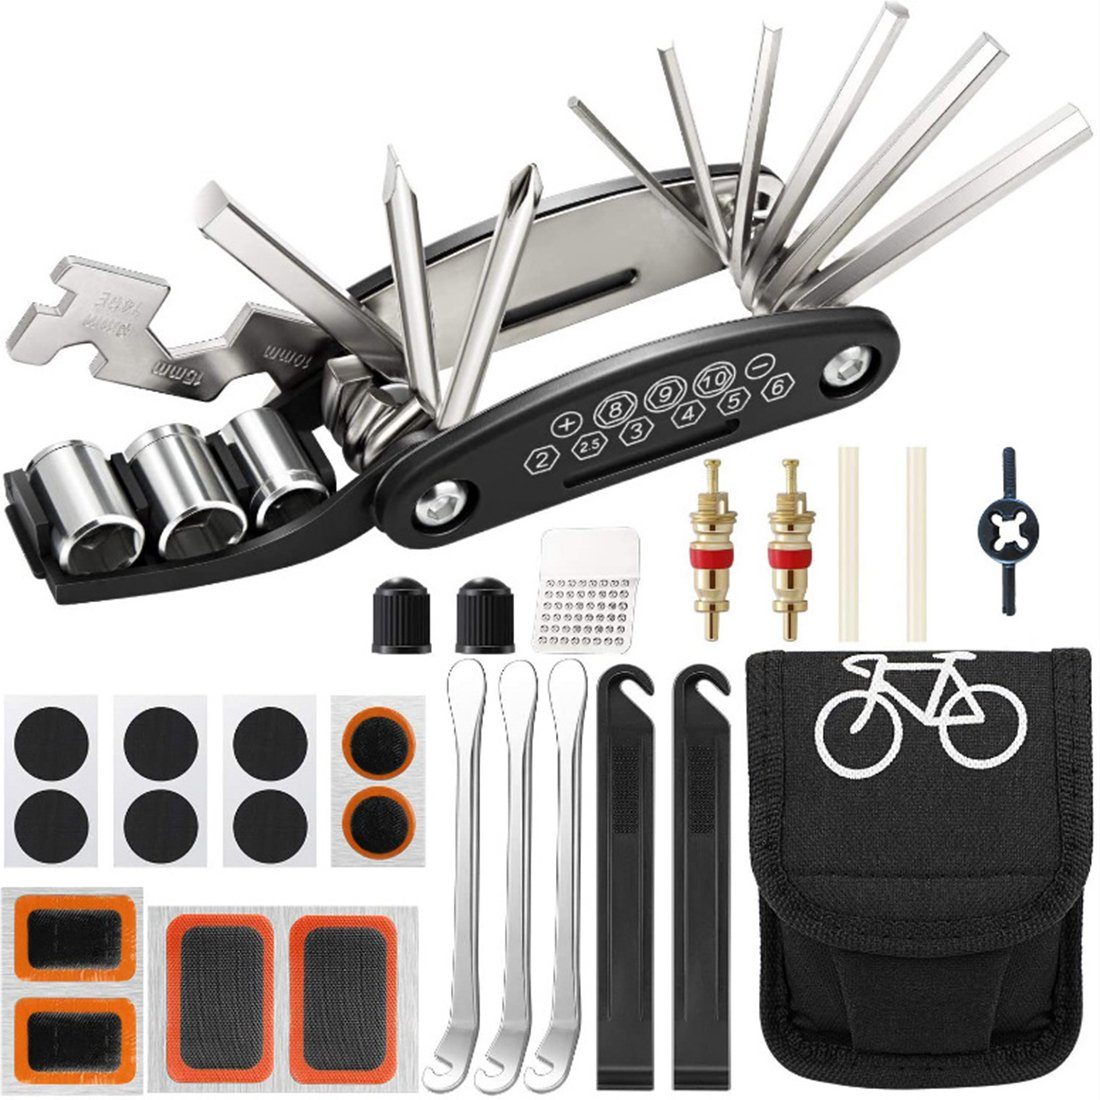 Haiaveng Fahrrad-Reparaturset Fahrrad-Multitool 16 in 1 Werkzeuge für Fahrrad Reparatur, Fahrradflickzeug Reparaturset Multifunktionswerkzeug mit Tasche